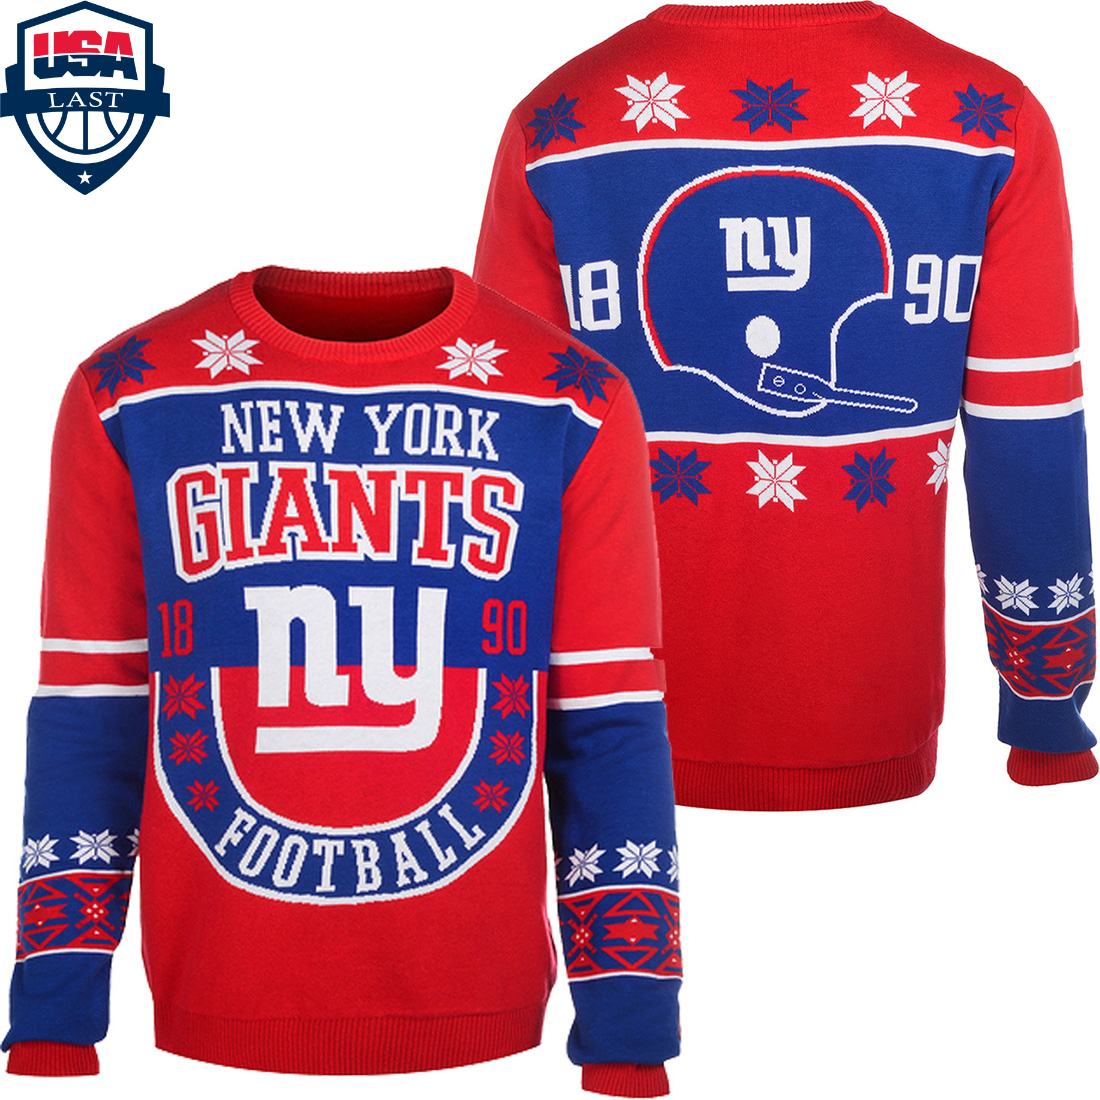 New York Giants NFL Retro Cotton Sweater